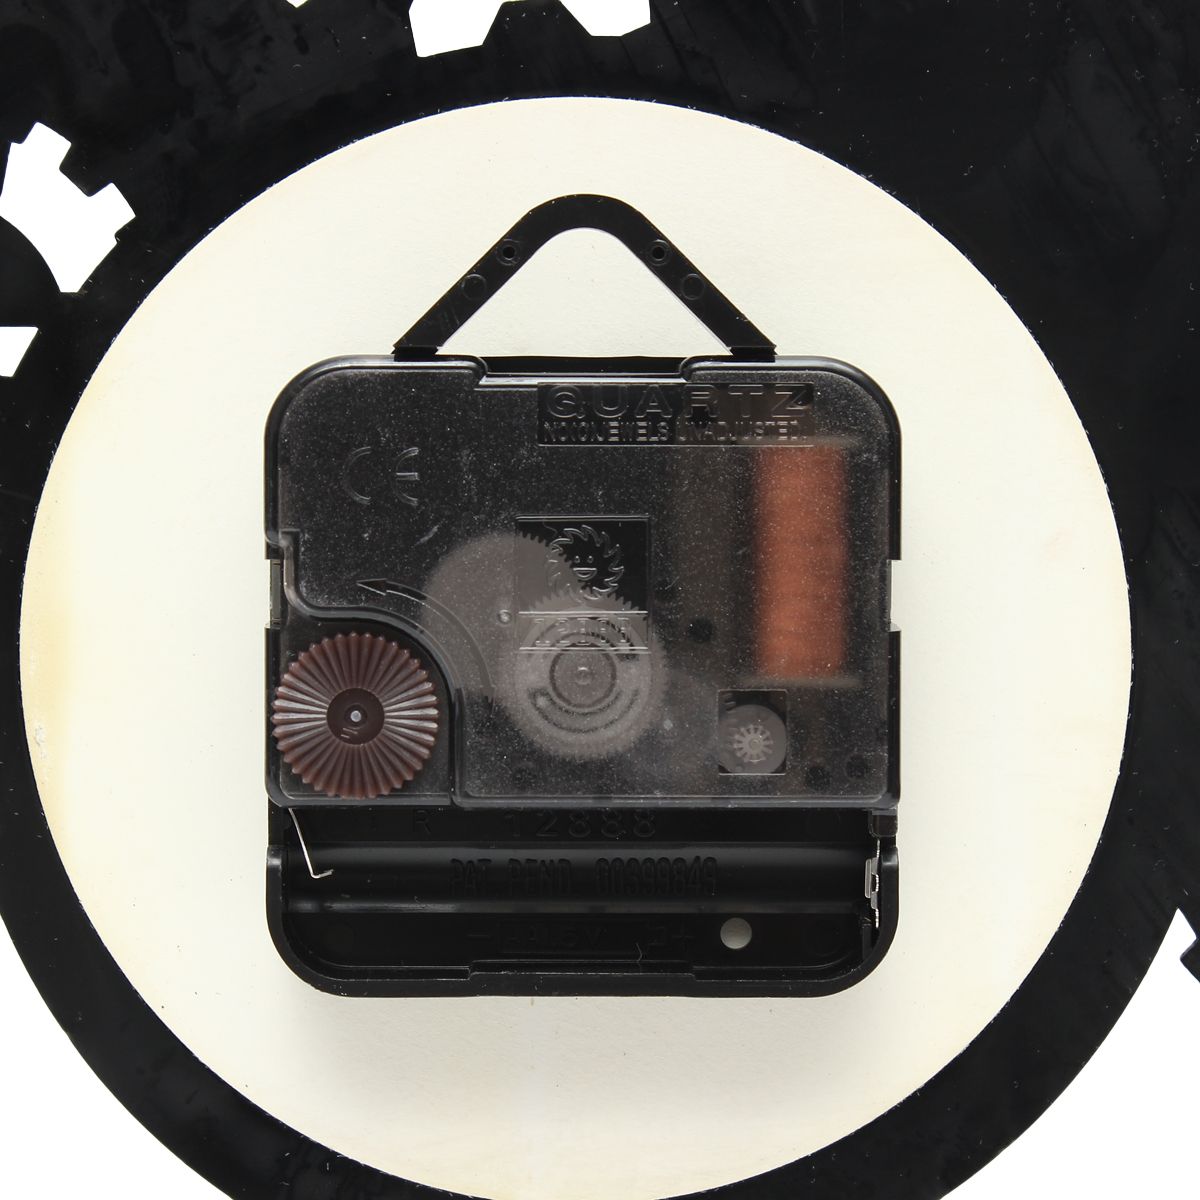 Steampunk-Cog-Wall-Clock-Gears-Vinyl-Record-Wall-Clock-Home-Office-Decor-1137996